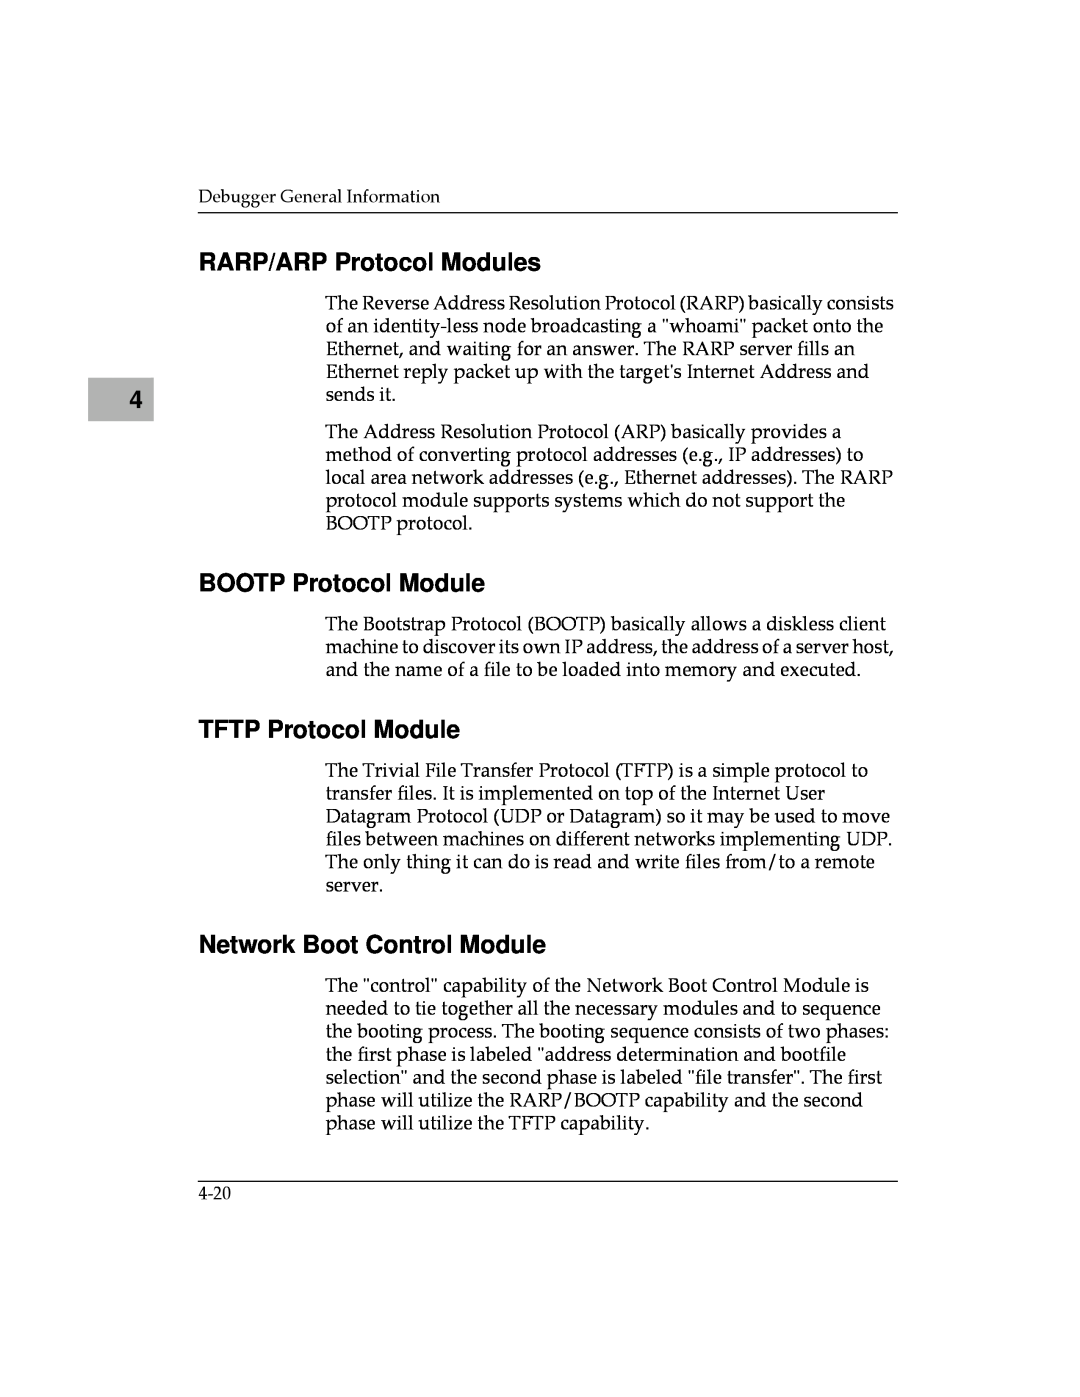 Motorola MVME187 manual RARP/ARP Protocol Modules, BOOTP Protocol Module, TFTP Protocol Module, Network Boot Control Module 